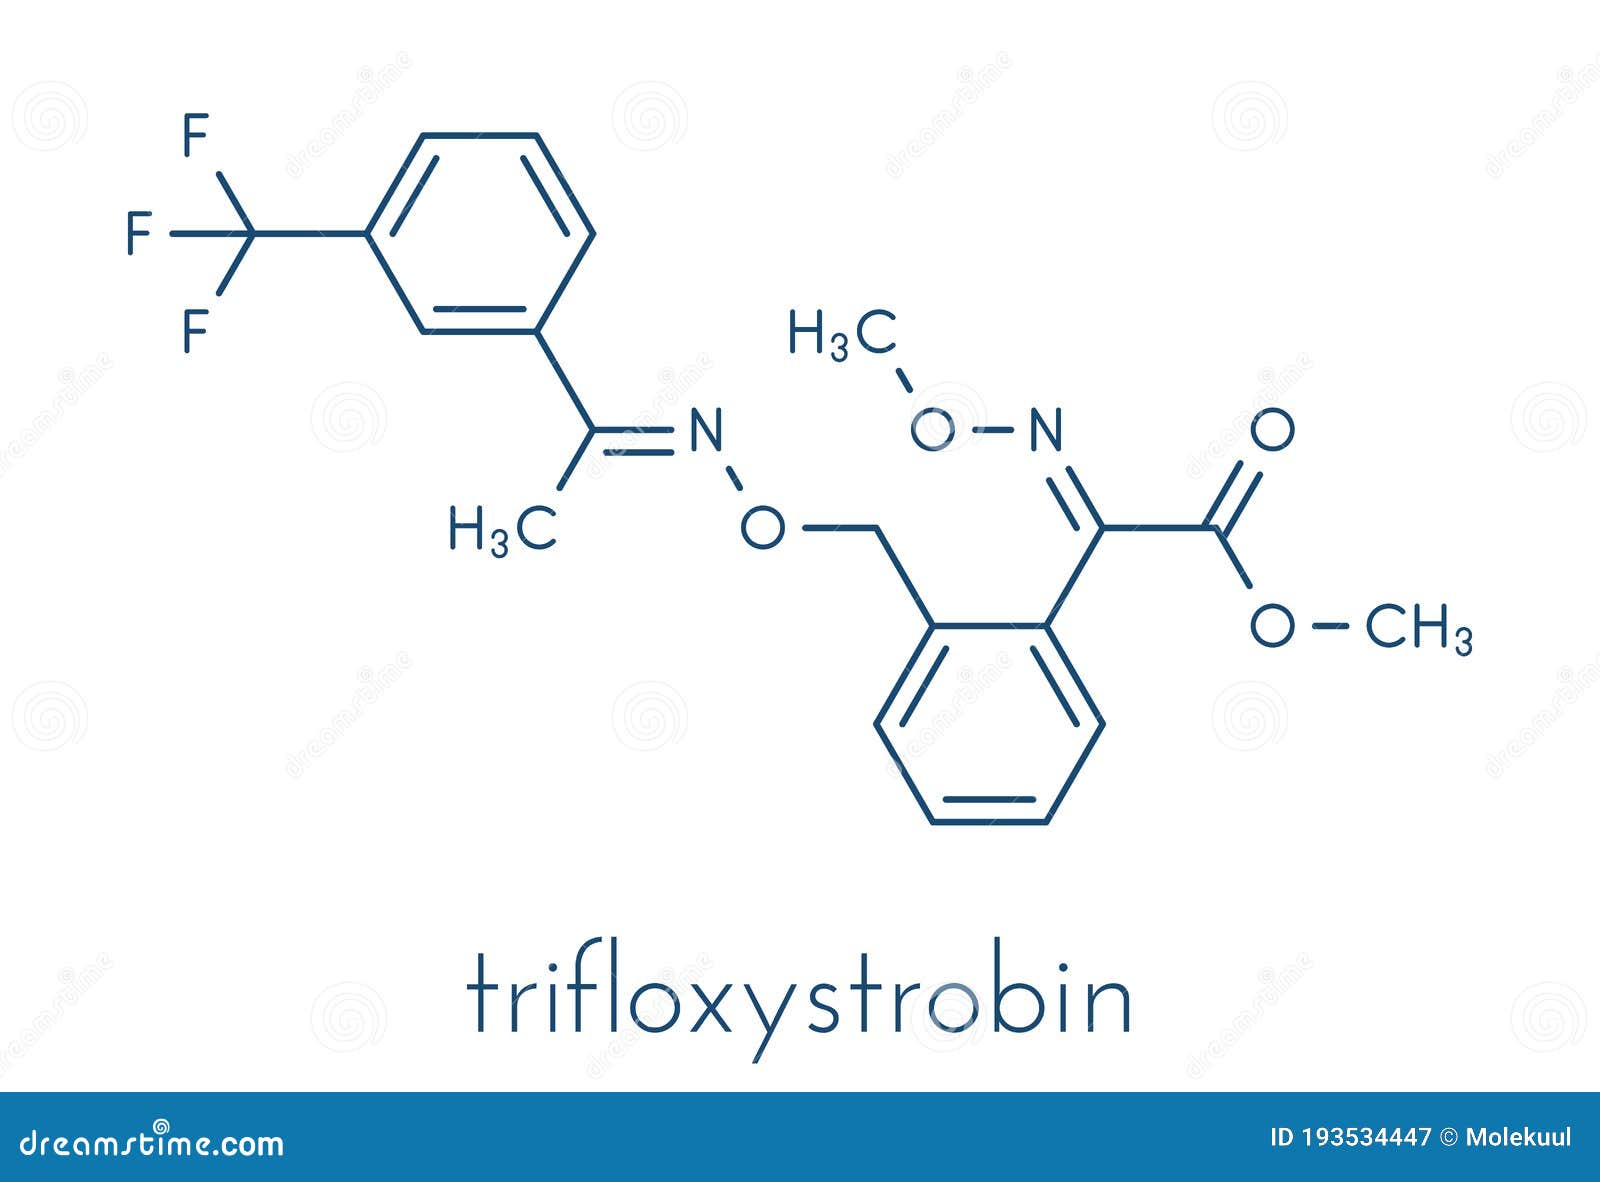 trifloxystrobin fungicide molecule. skeletal formula